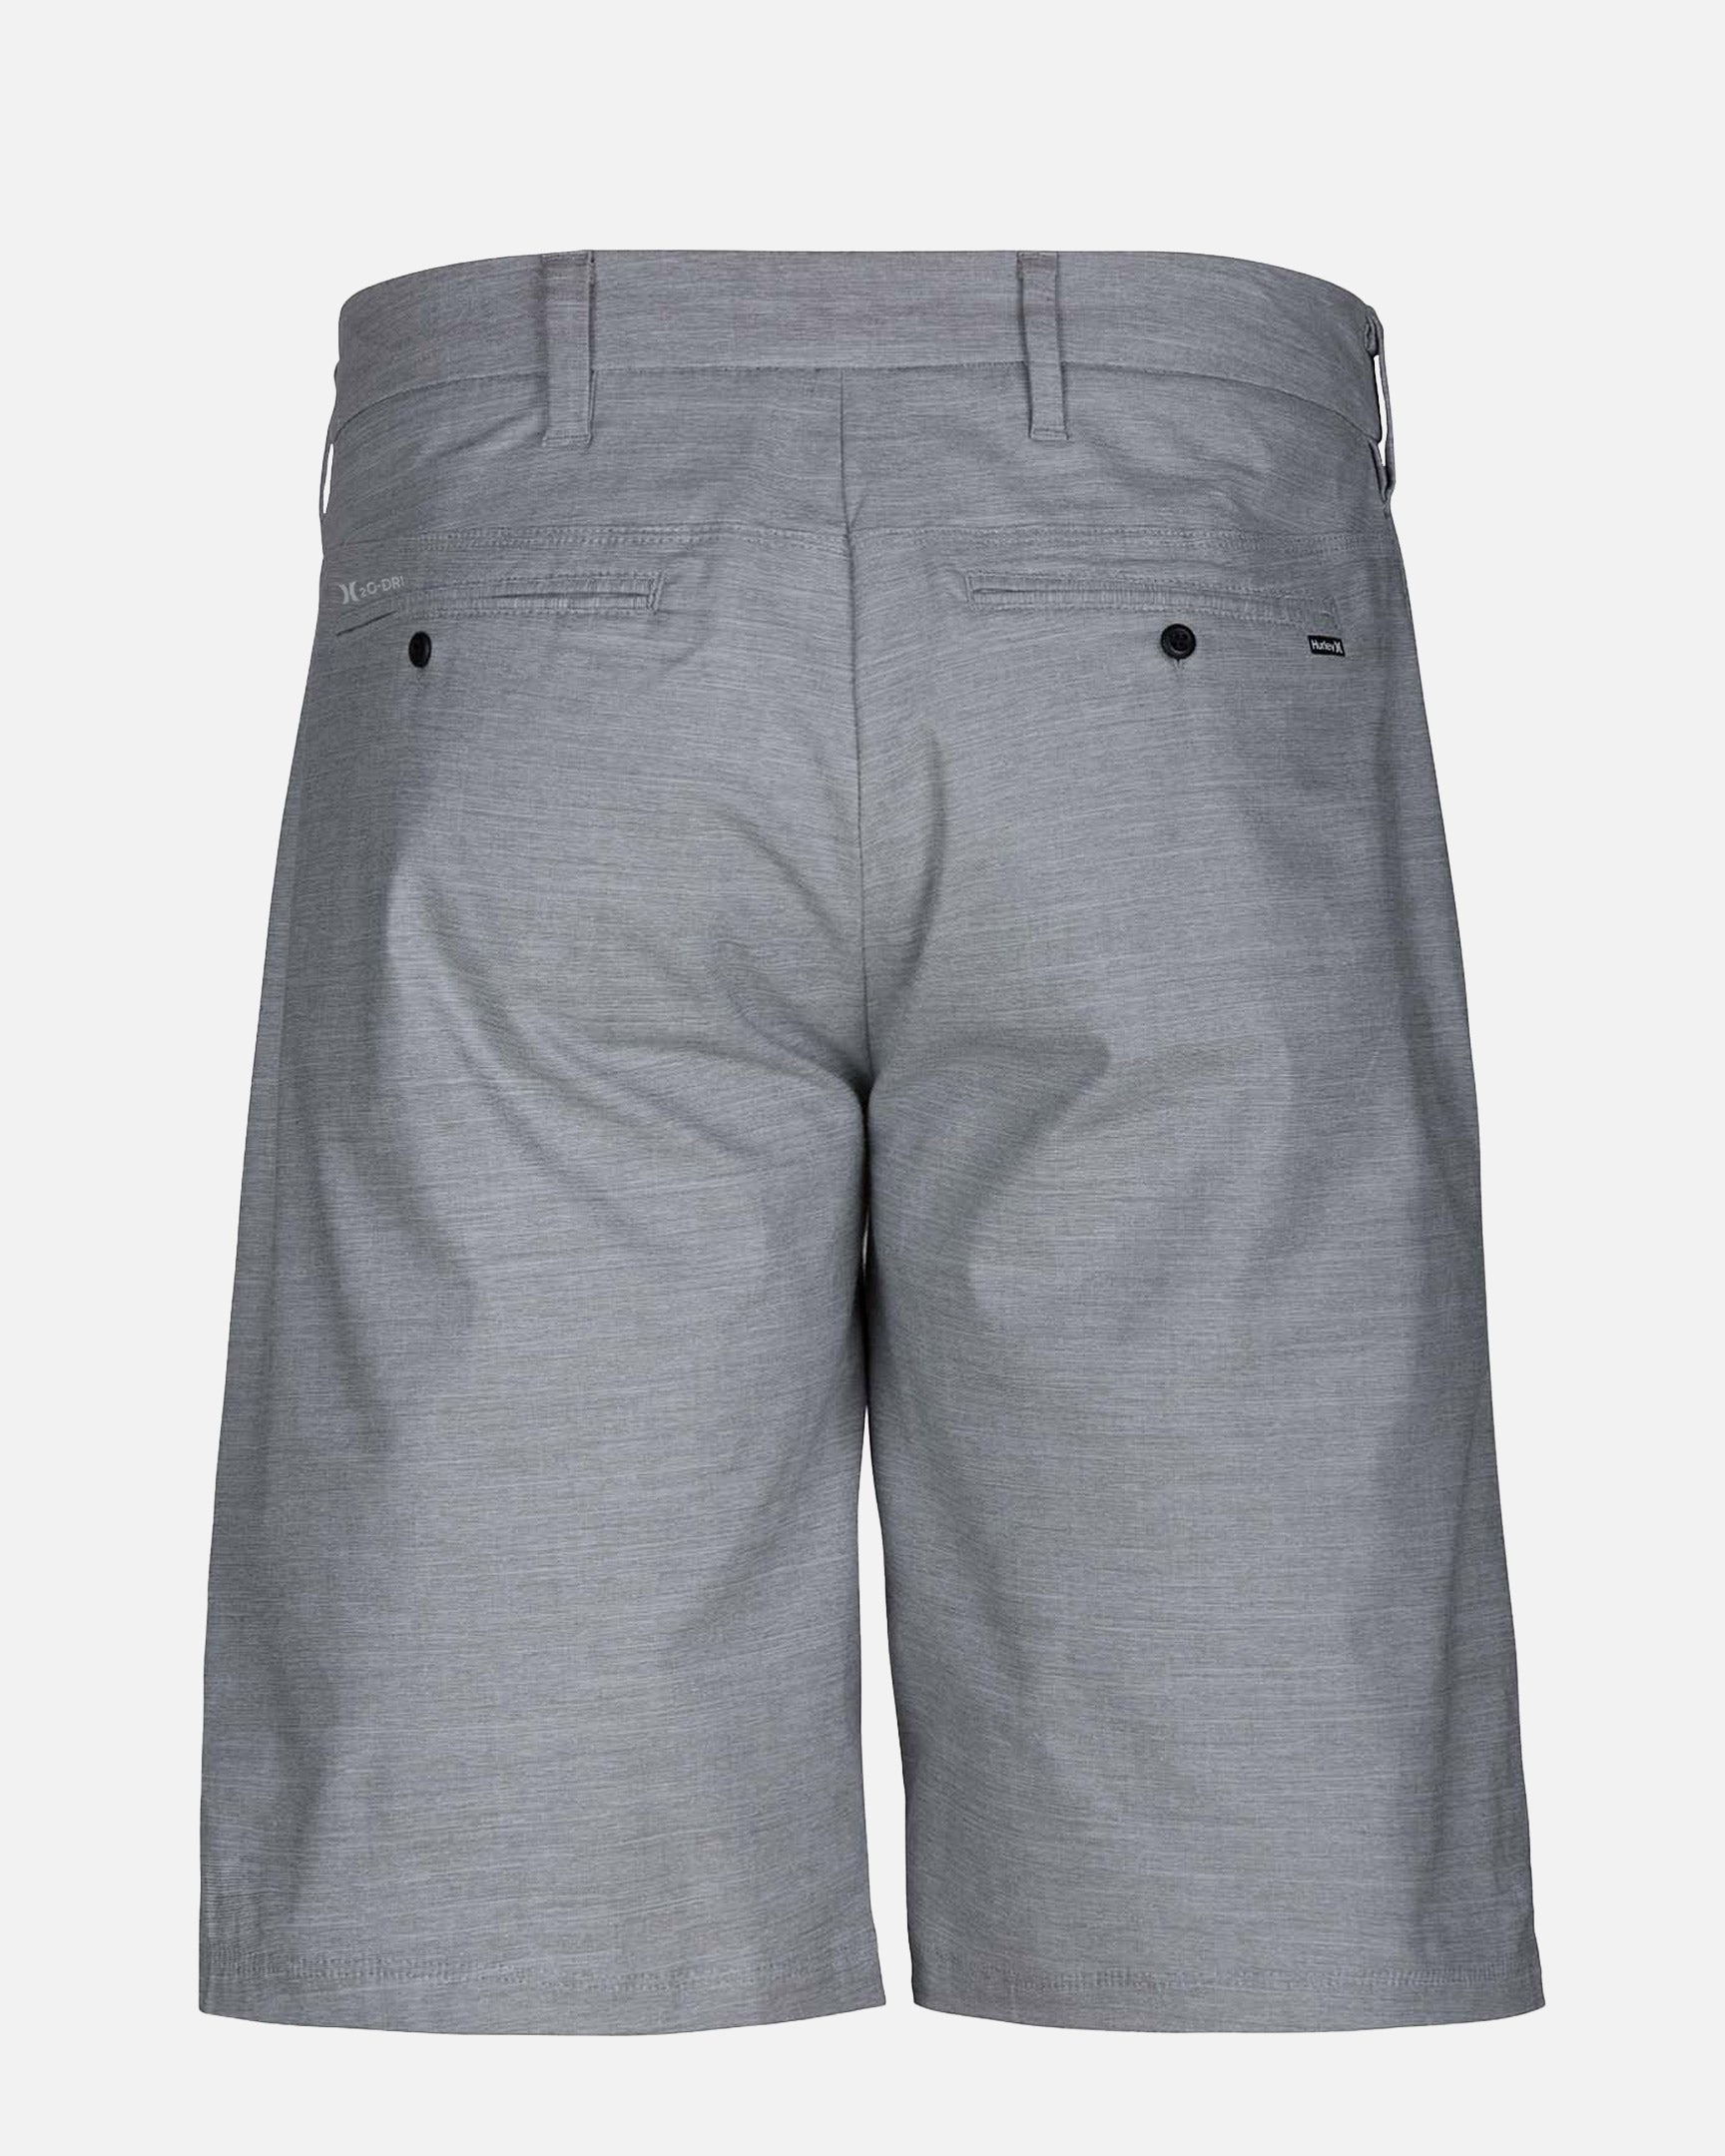 Hurley Dri Fit Commando Shorts Grey